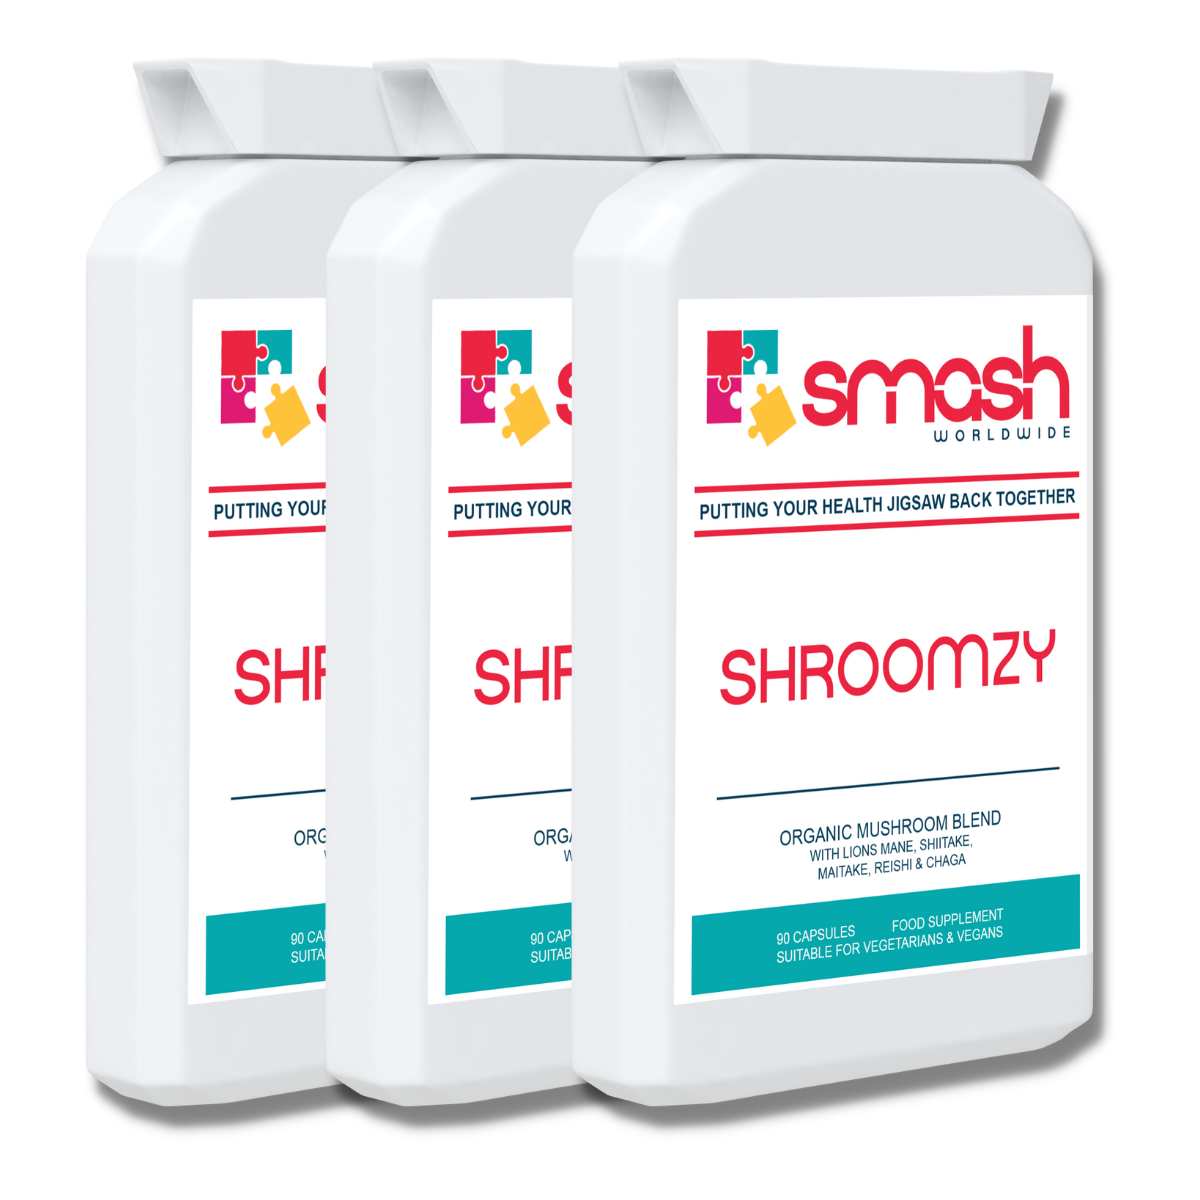 Shroomzy SMASH Worldwide Organic Mushroom Blend